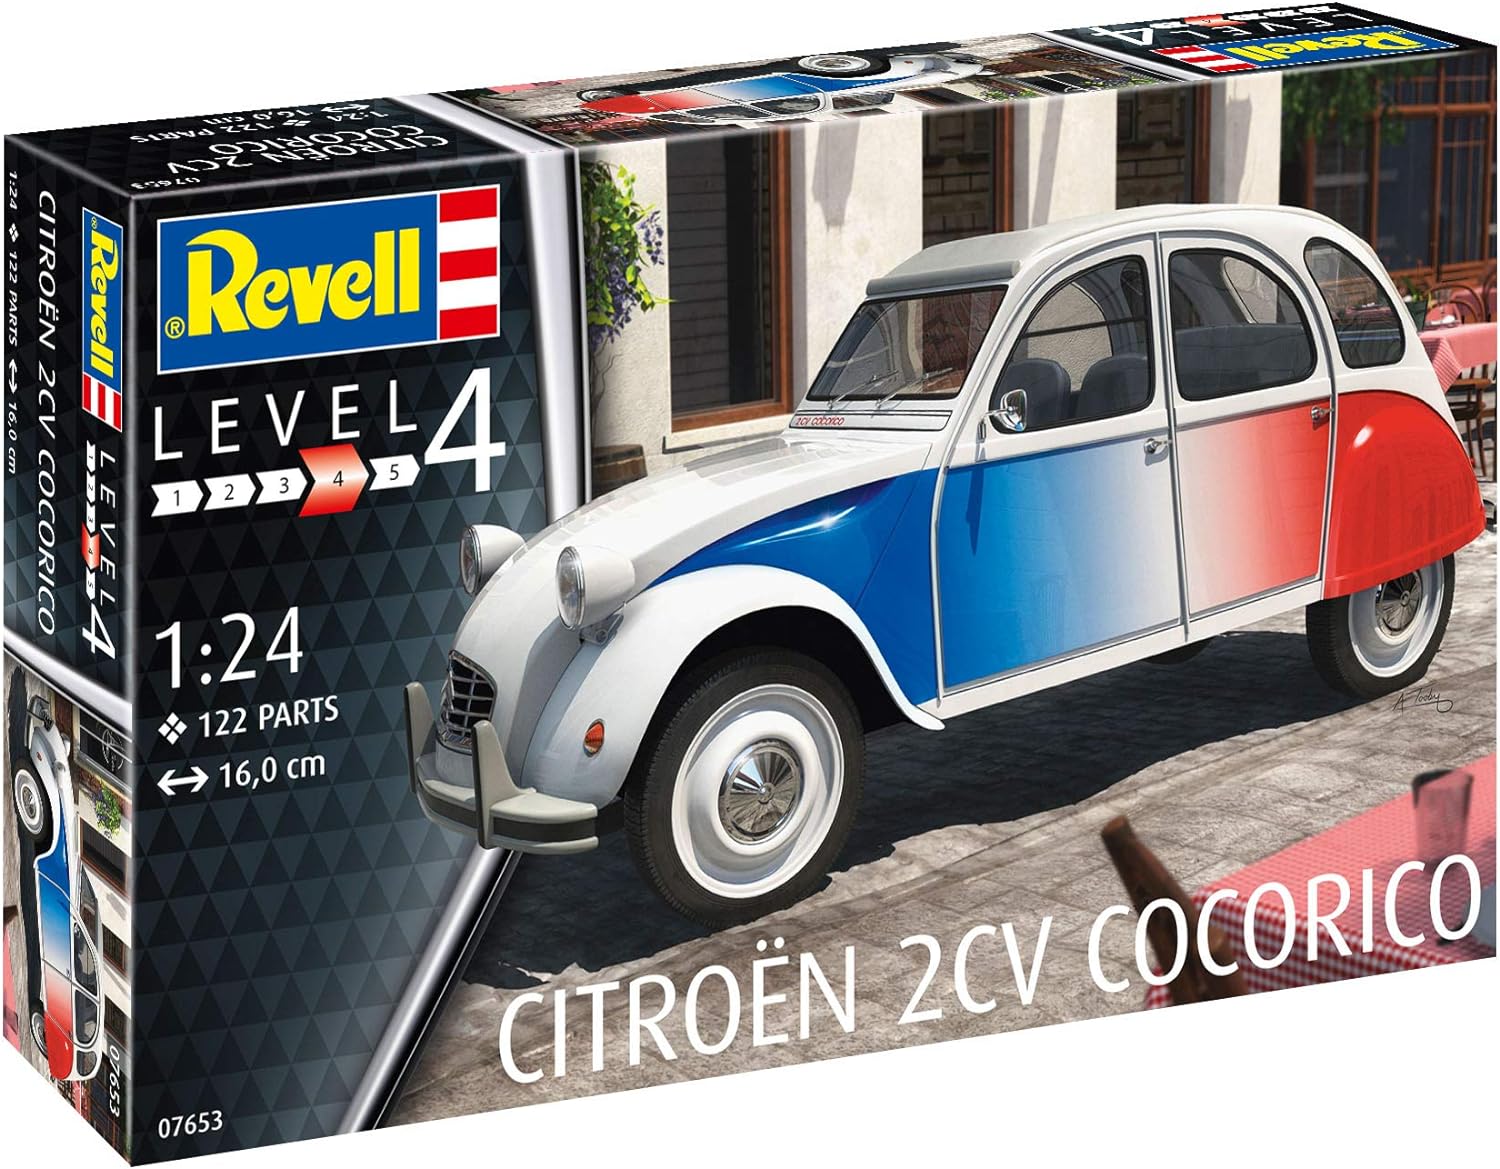 Citroen 2CV Cocorico 1:24 Scale Kit